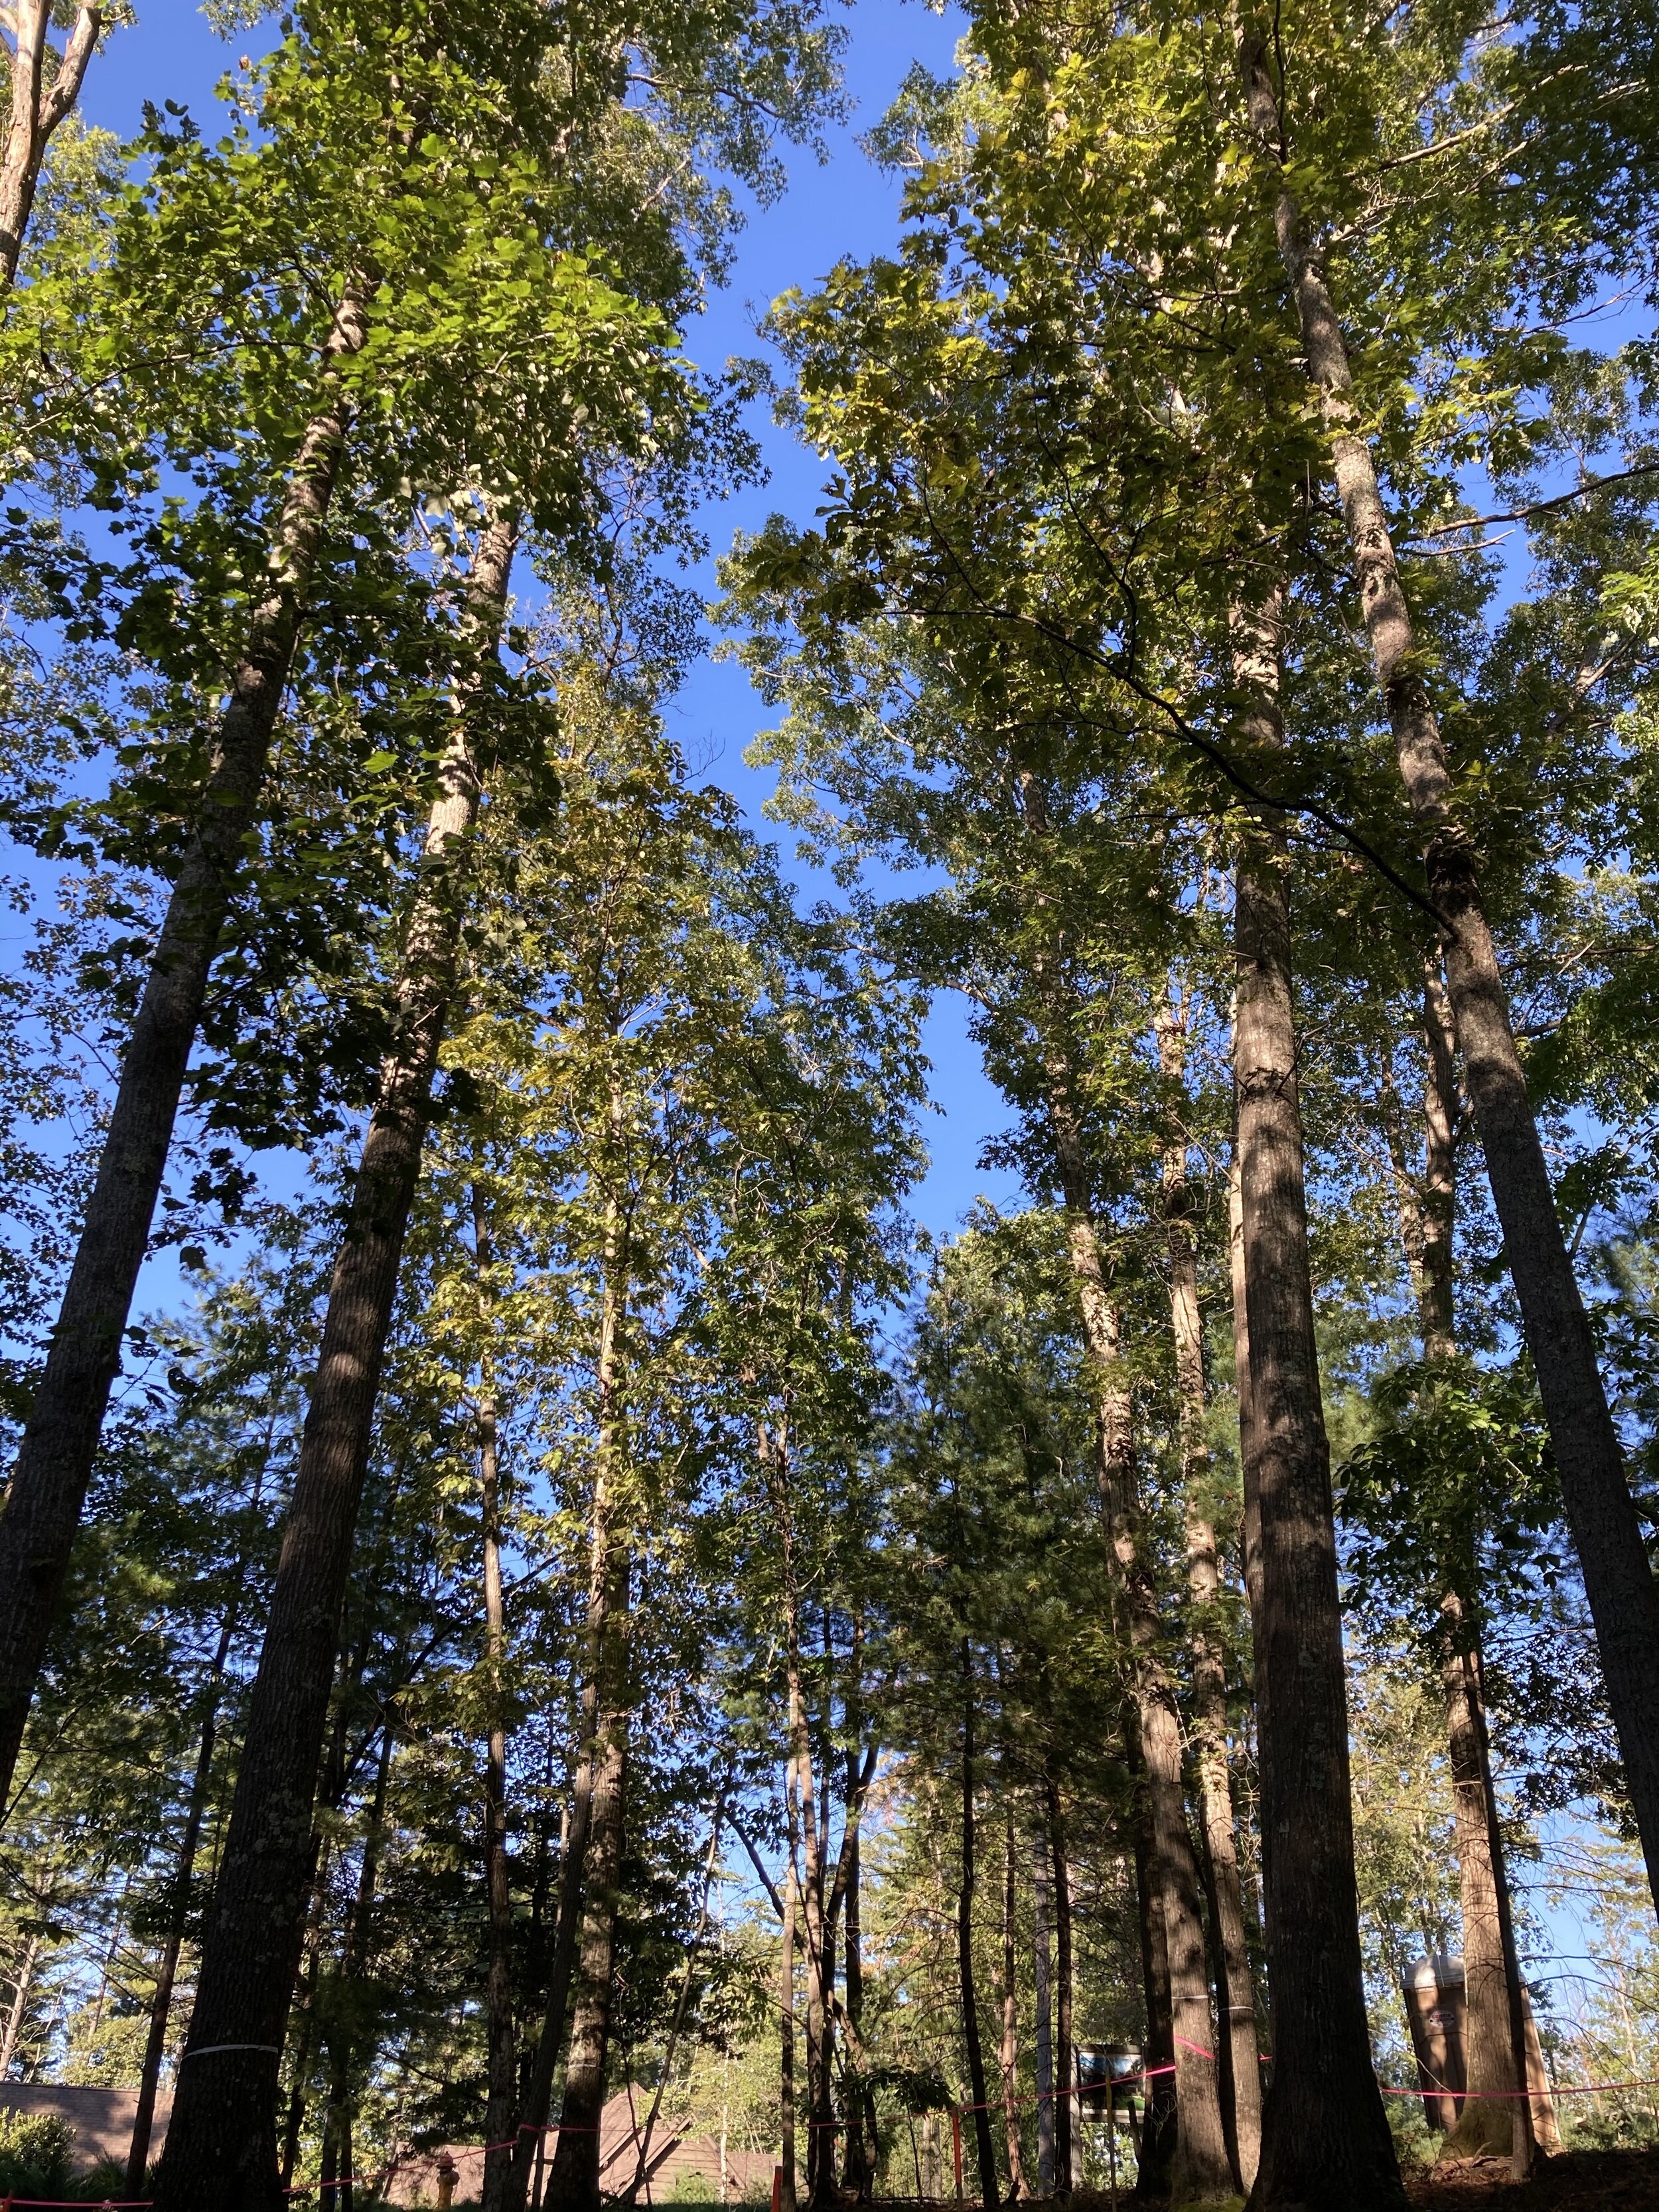 Looking upward, Biltmore forest